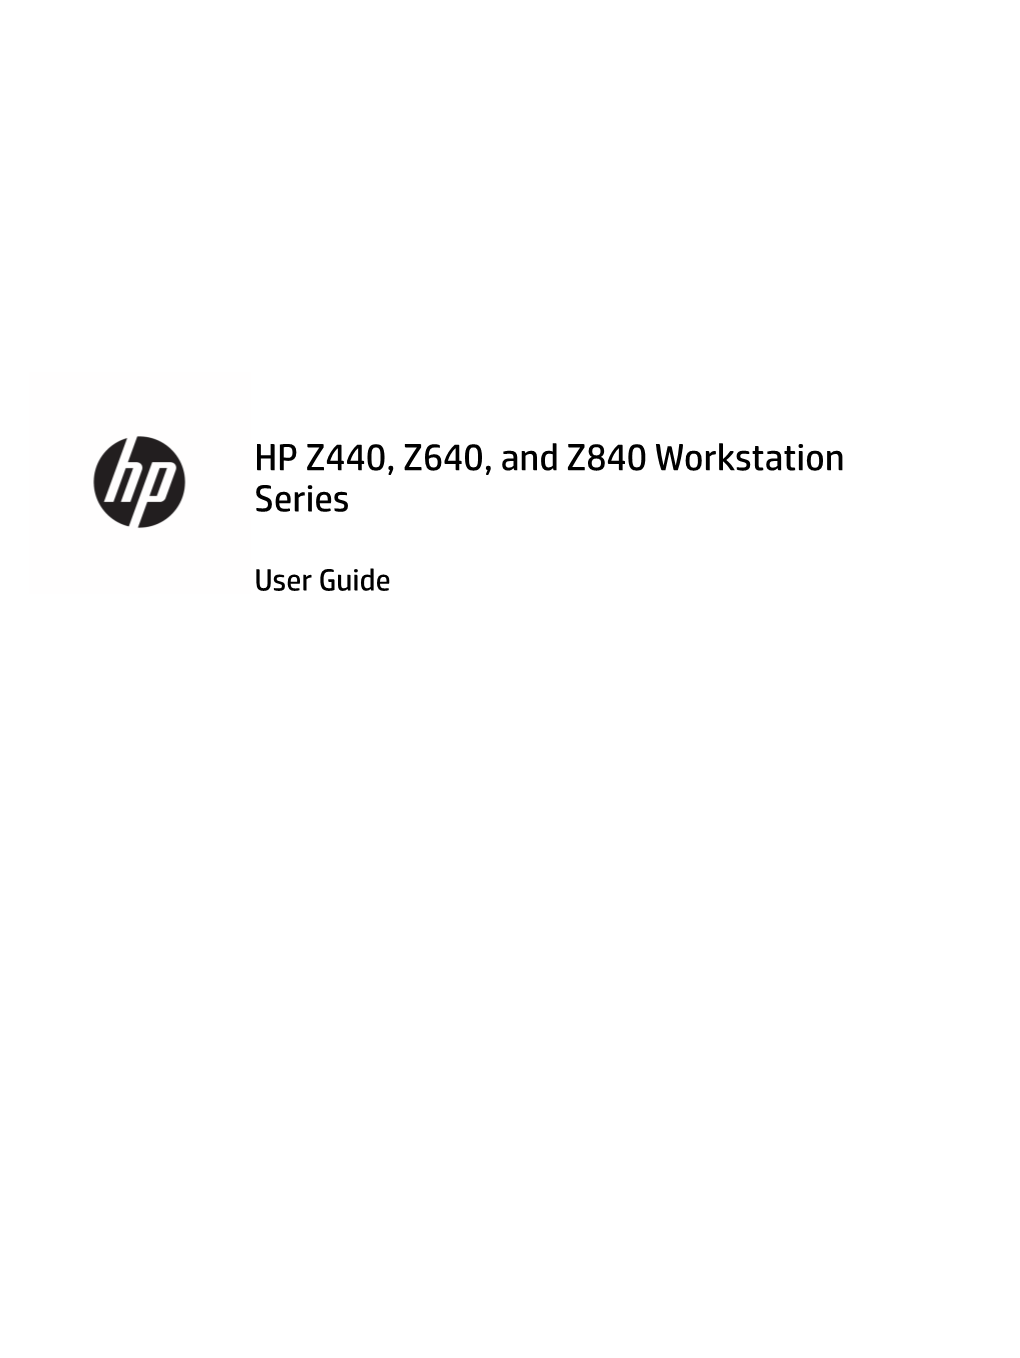 HP Z440, Z640, and Z840 Workstation Series User Guide